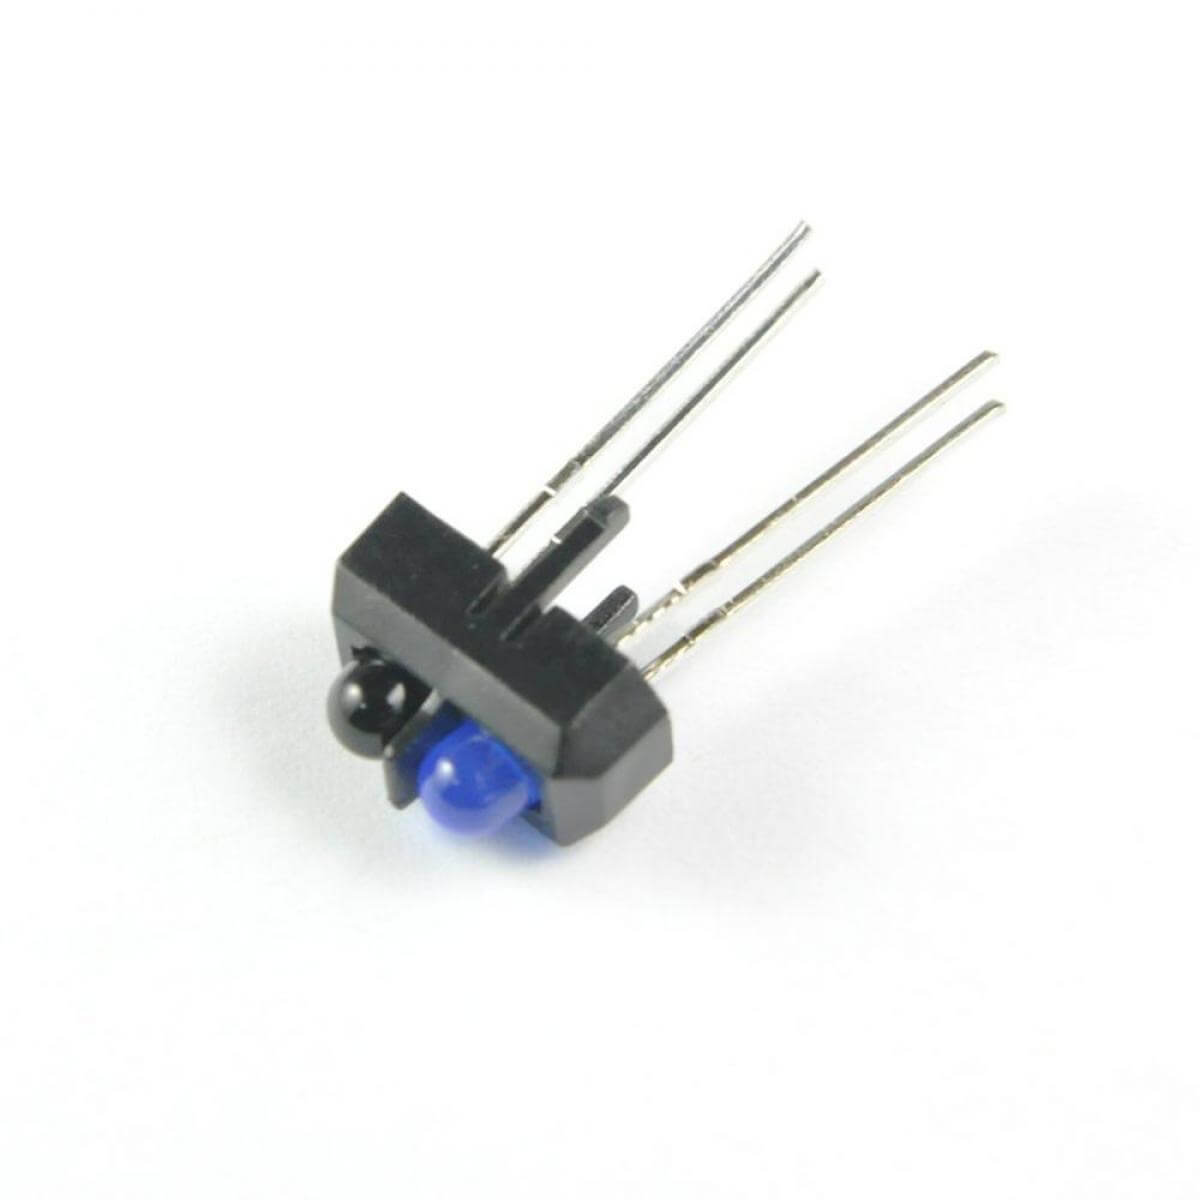 TCRT5000 Reflective IR sensor photoelectric switch